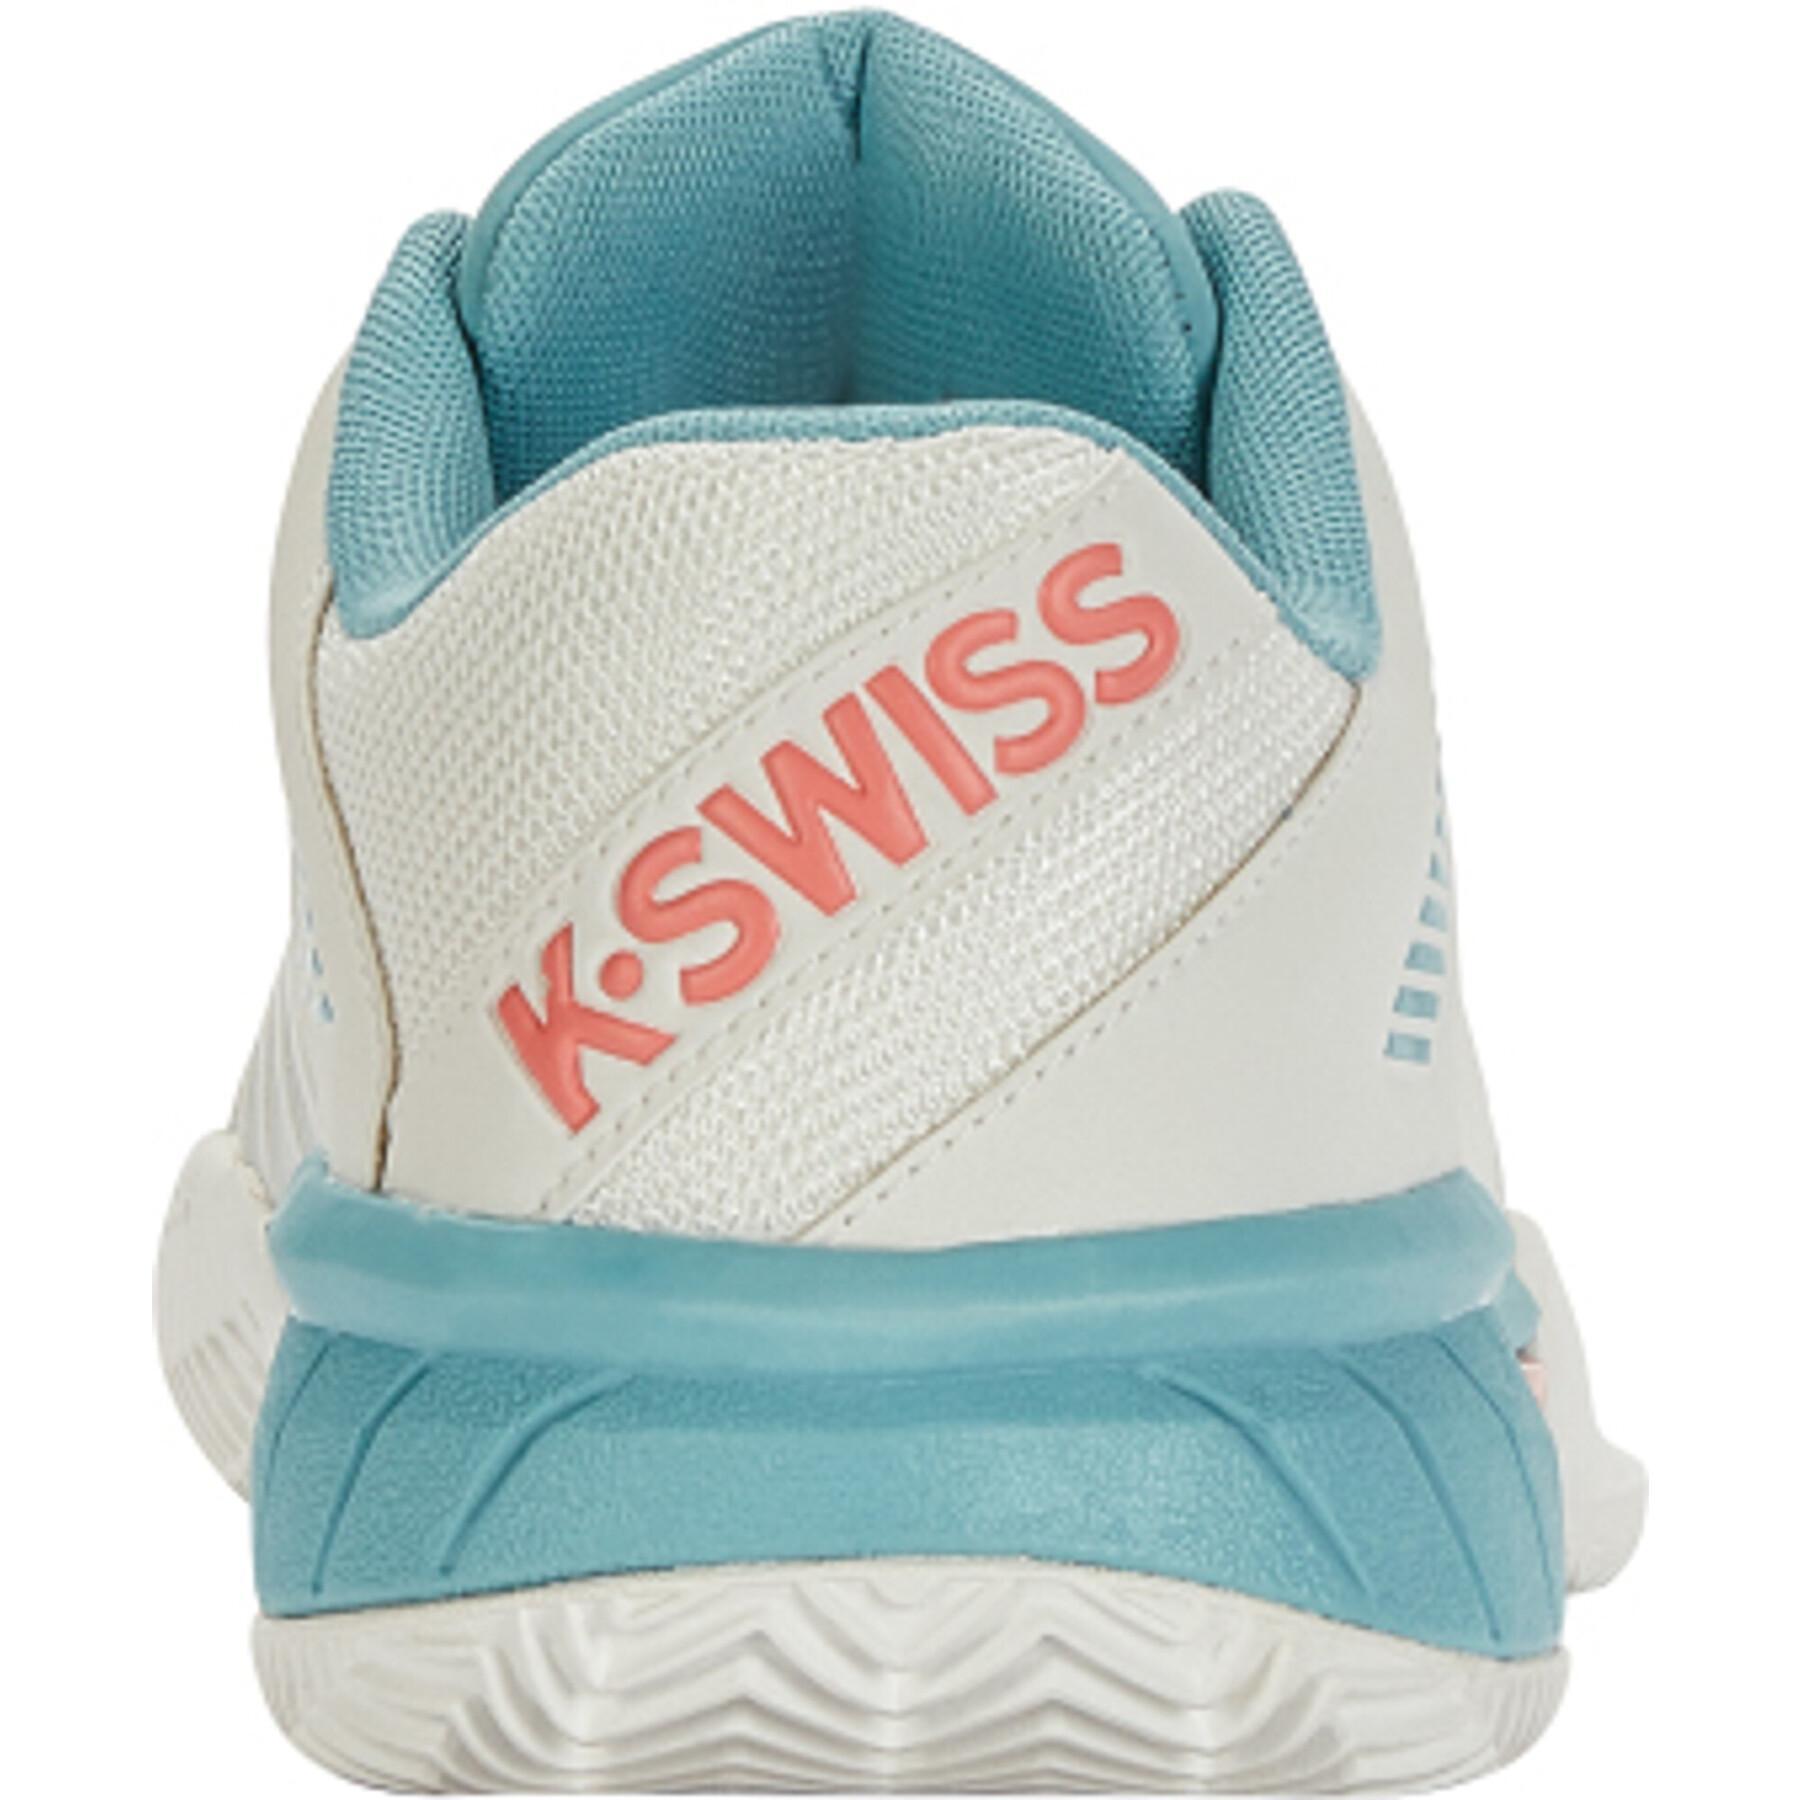 Sapatos de ténis femininos K-Swiss Express Light 3 Hb